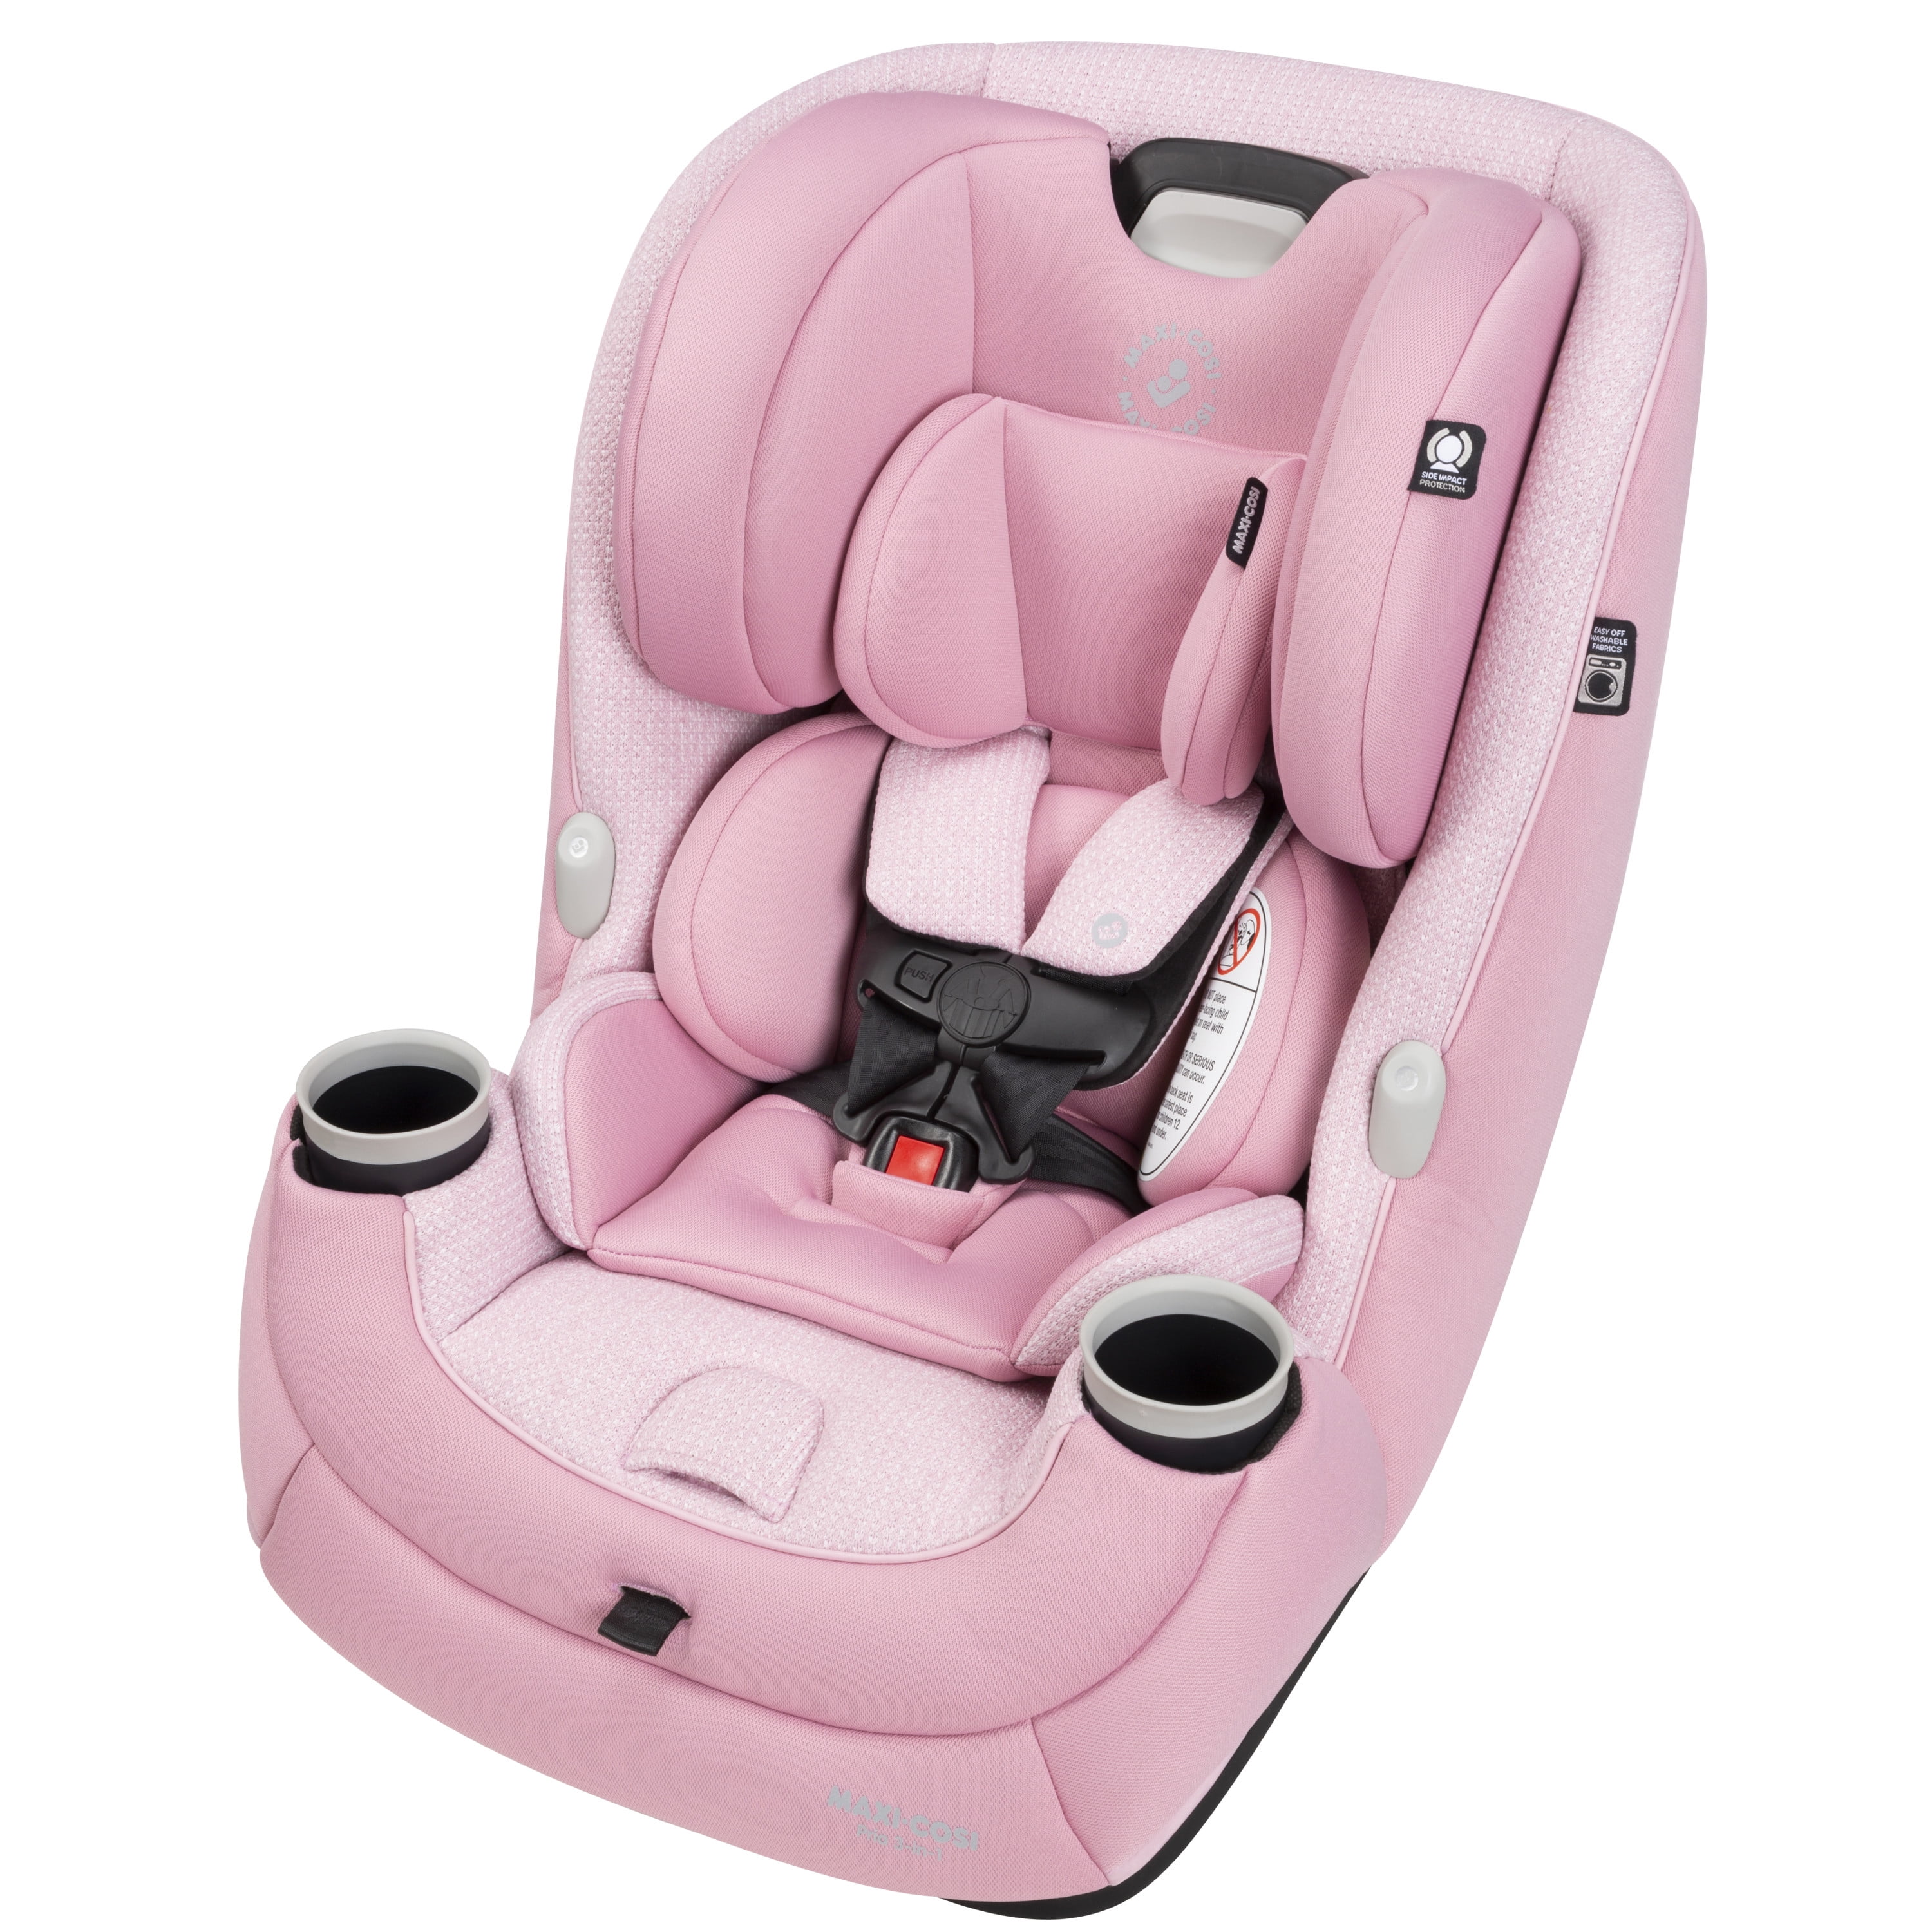 Maxi-Cosi Pria All-in-One Convertible Car Seat, Rose Pink - Walmart.com